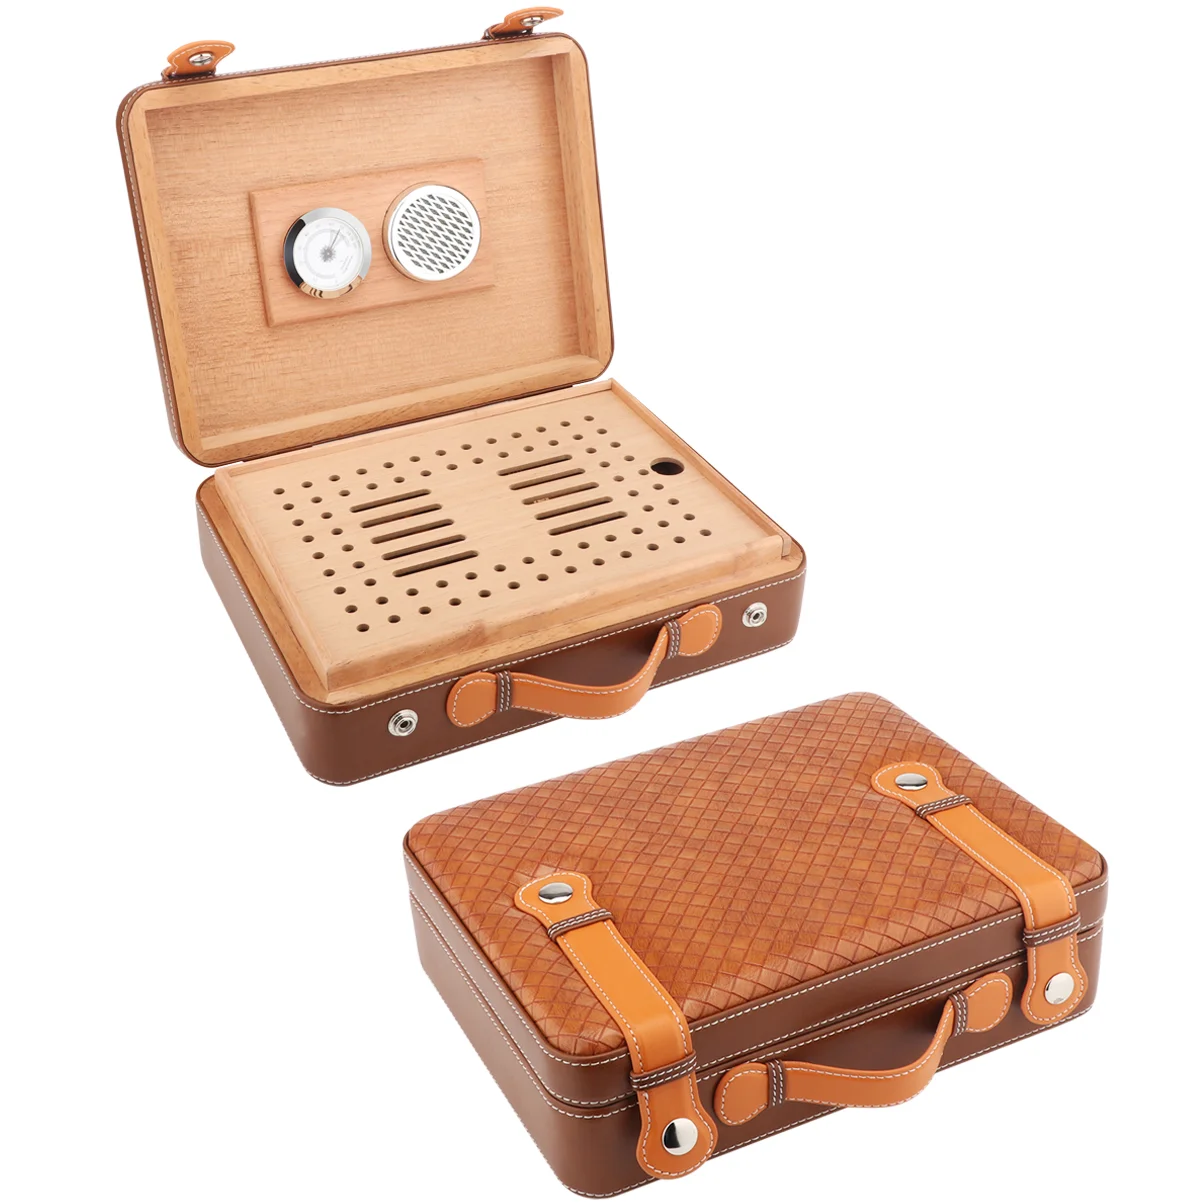 XIFEI Travel Cigar Humidor Box W/Hygrometer Humidifier 50pcs Capacity Cedar Wood Cabinet For Cohiba Portable Smoking Accessories